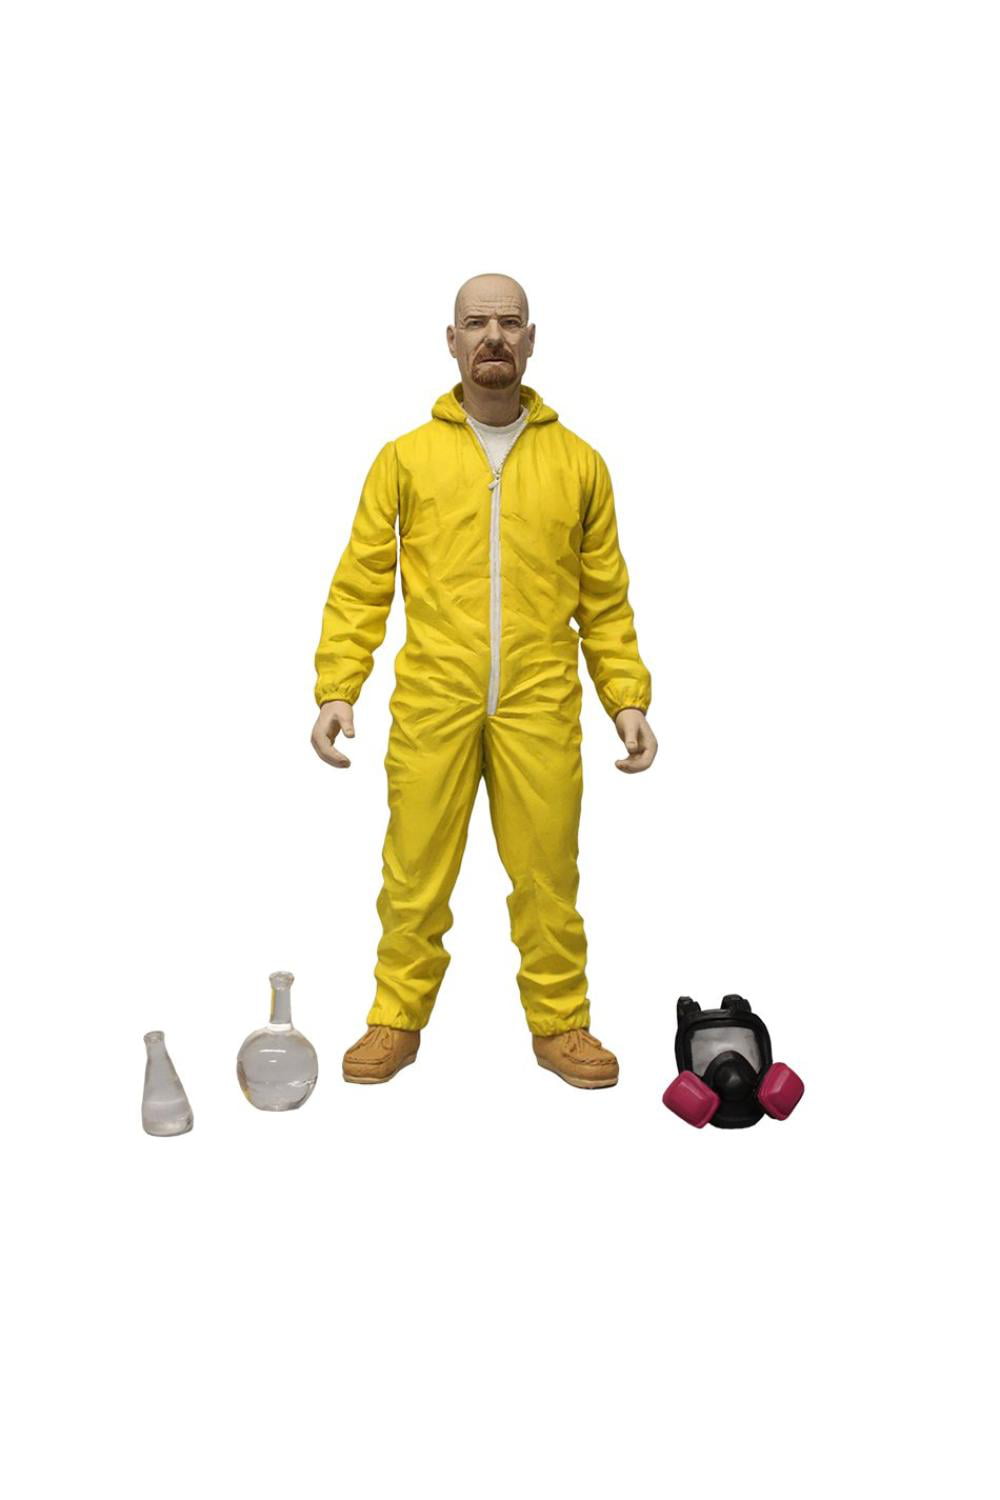 Rare Breaking Bad Walter White Hazmat Suit  6" Action Figure Boy Kid Toy Gift 